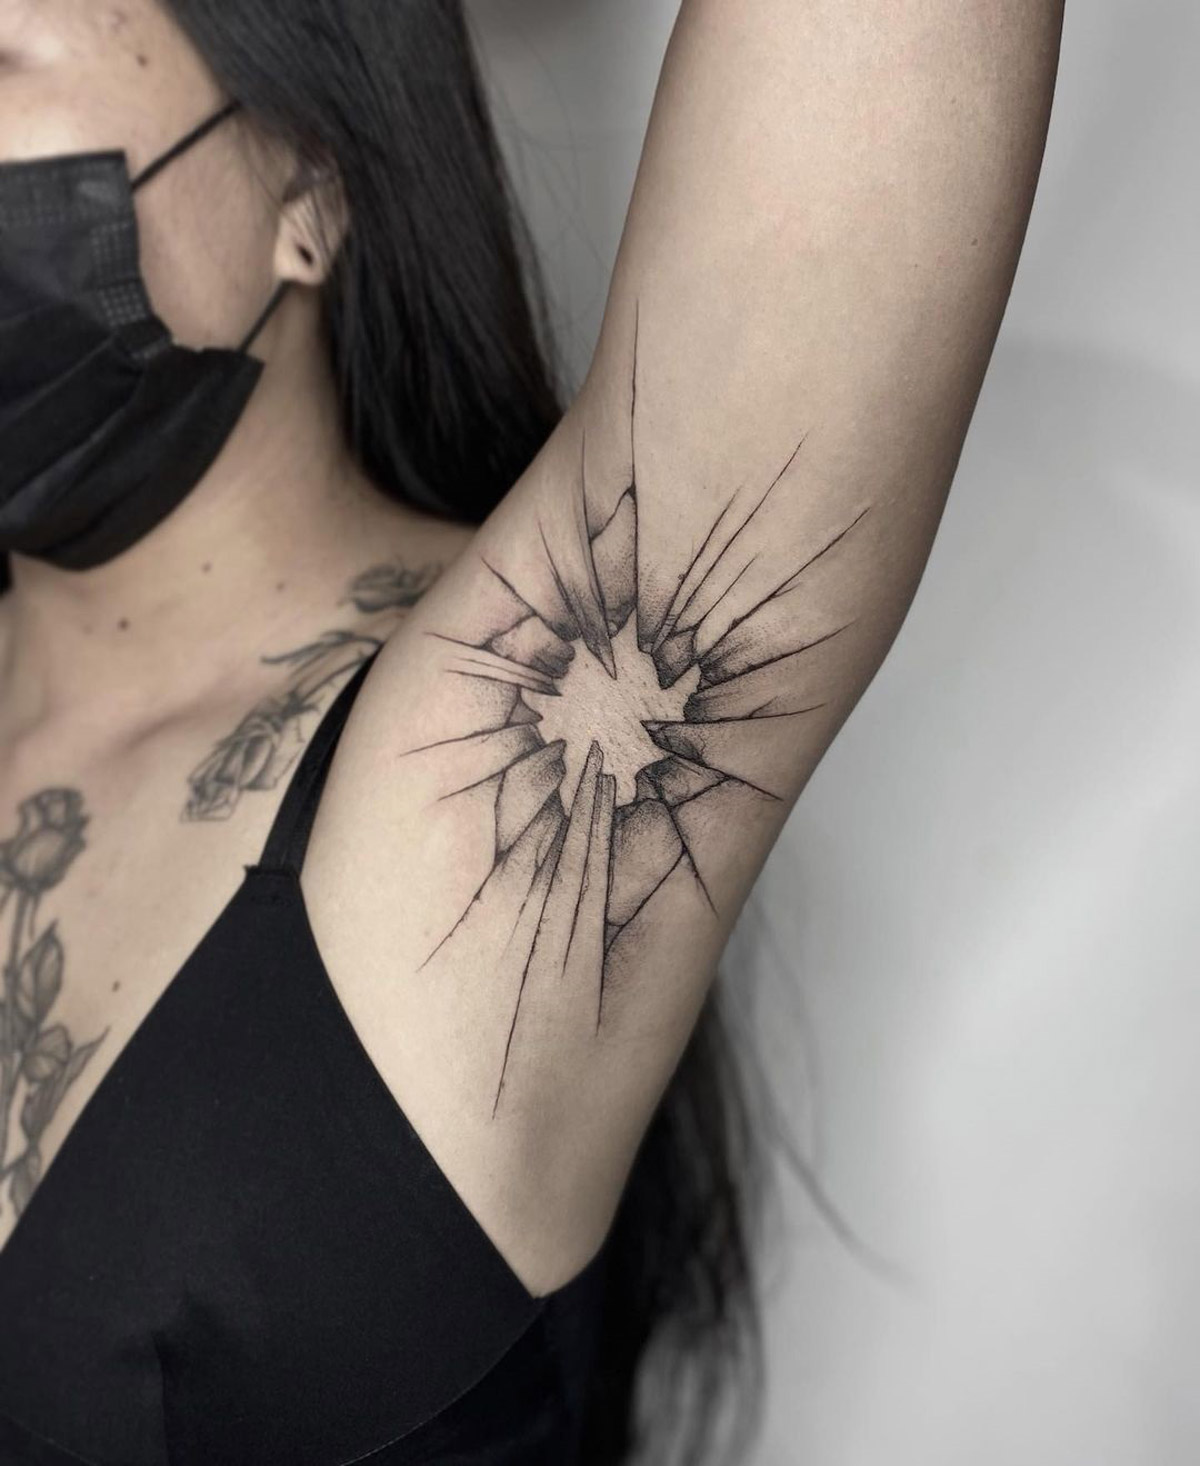 Shattered Glass Armpit Tattoo